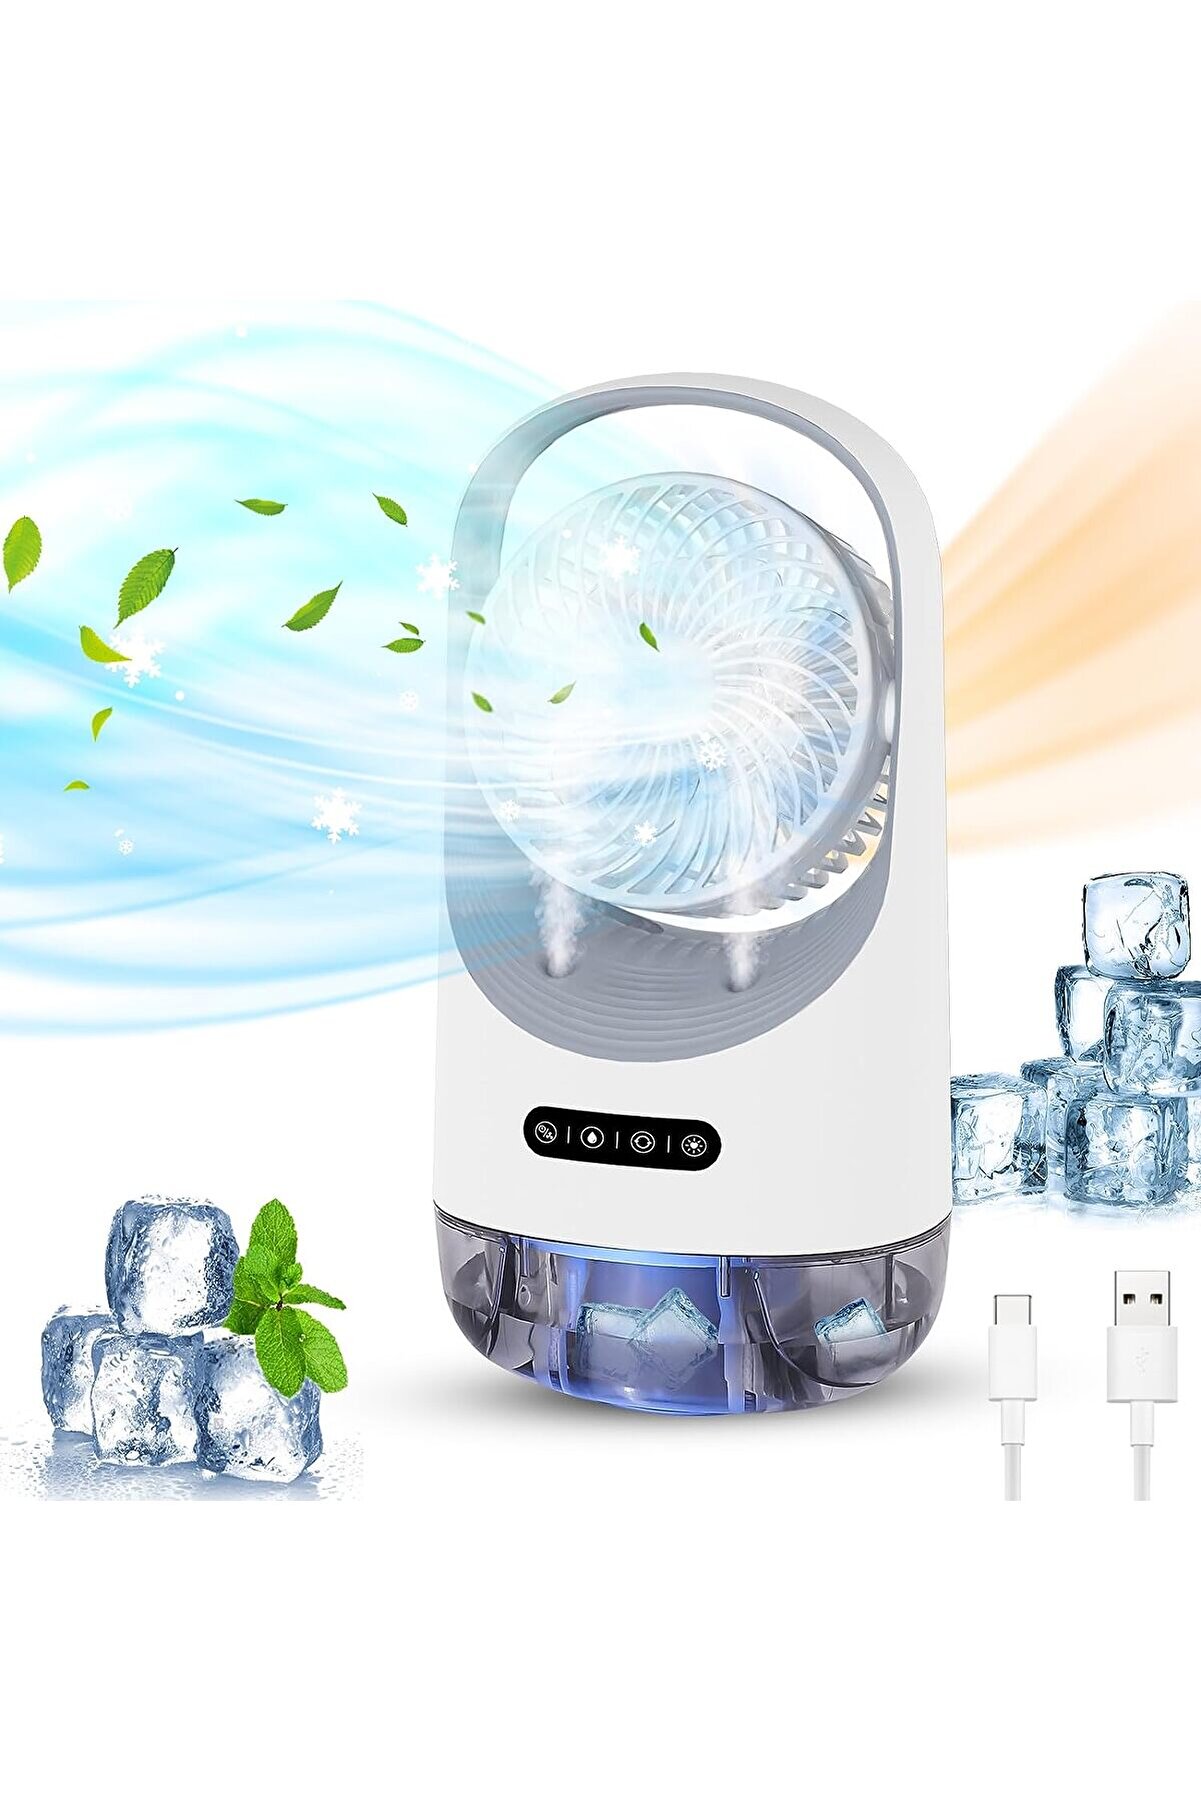 Diealles Shine Mini hava soğutucu, 4'ü 1 arada kişisel mobil klima cihazı